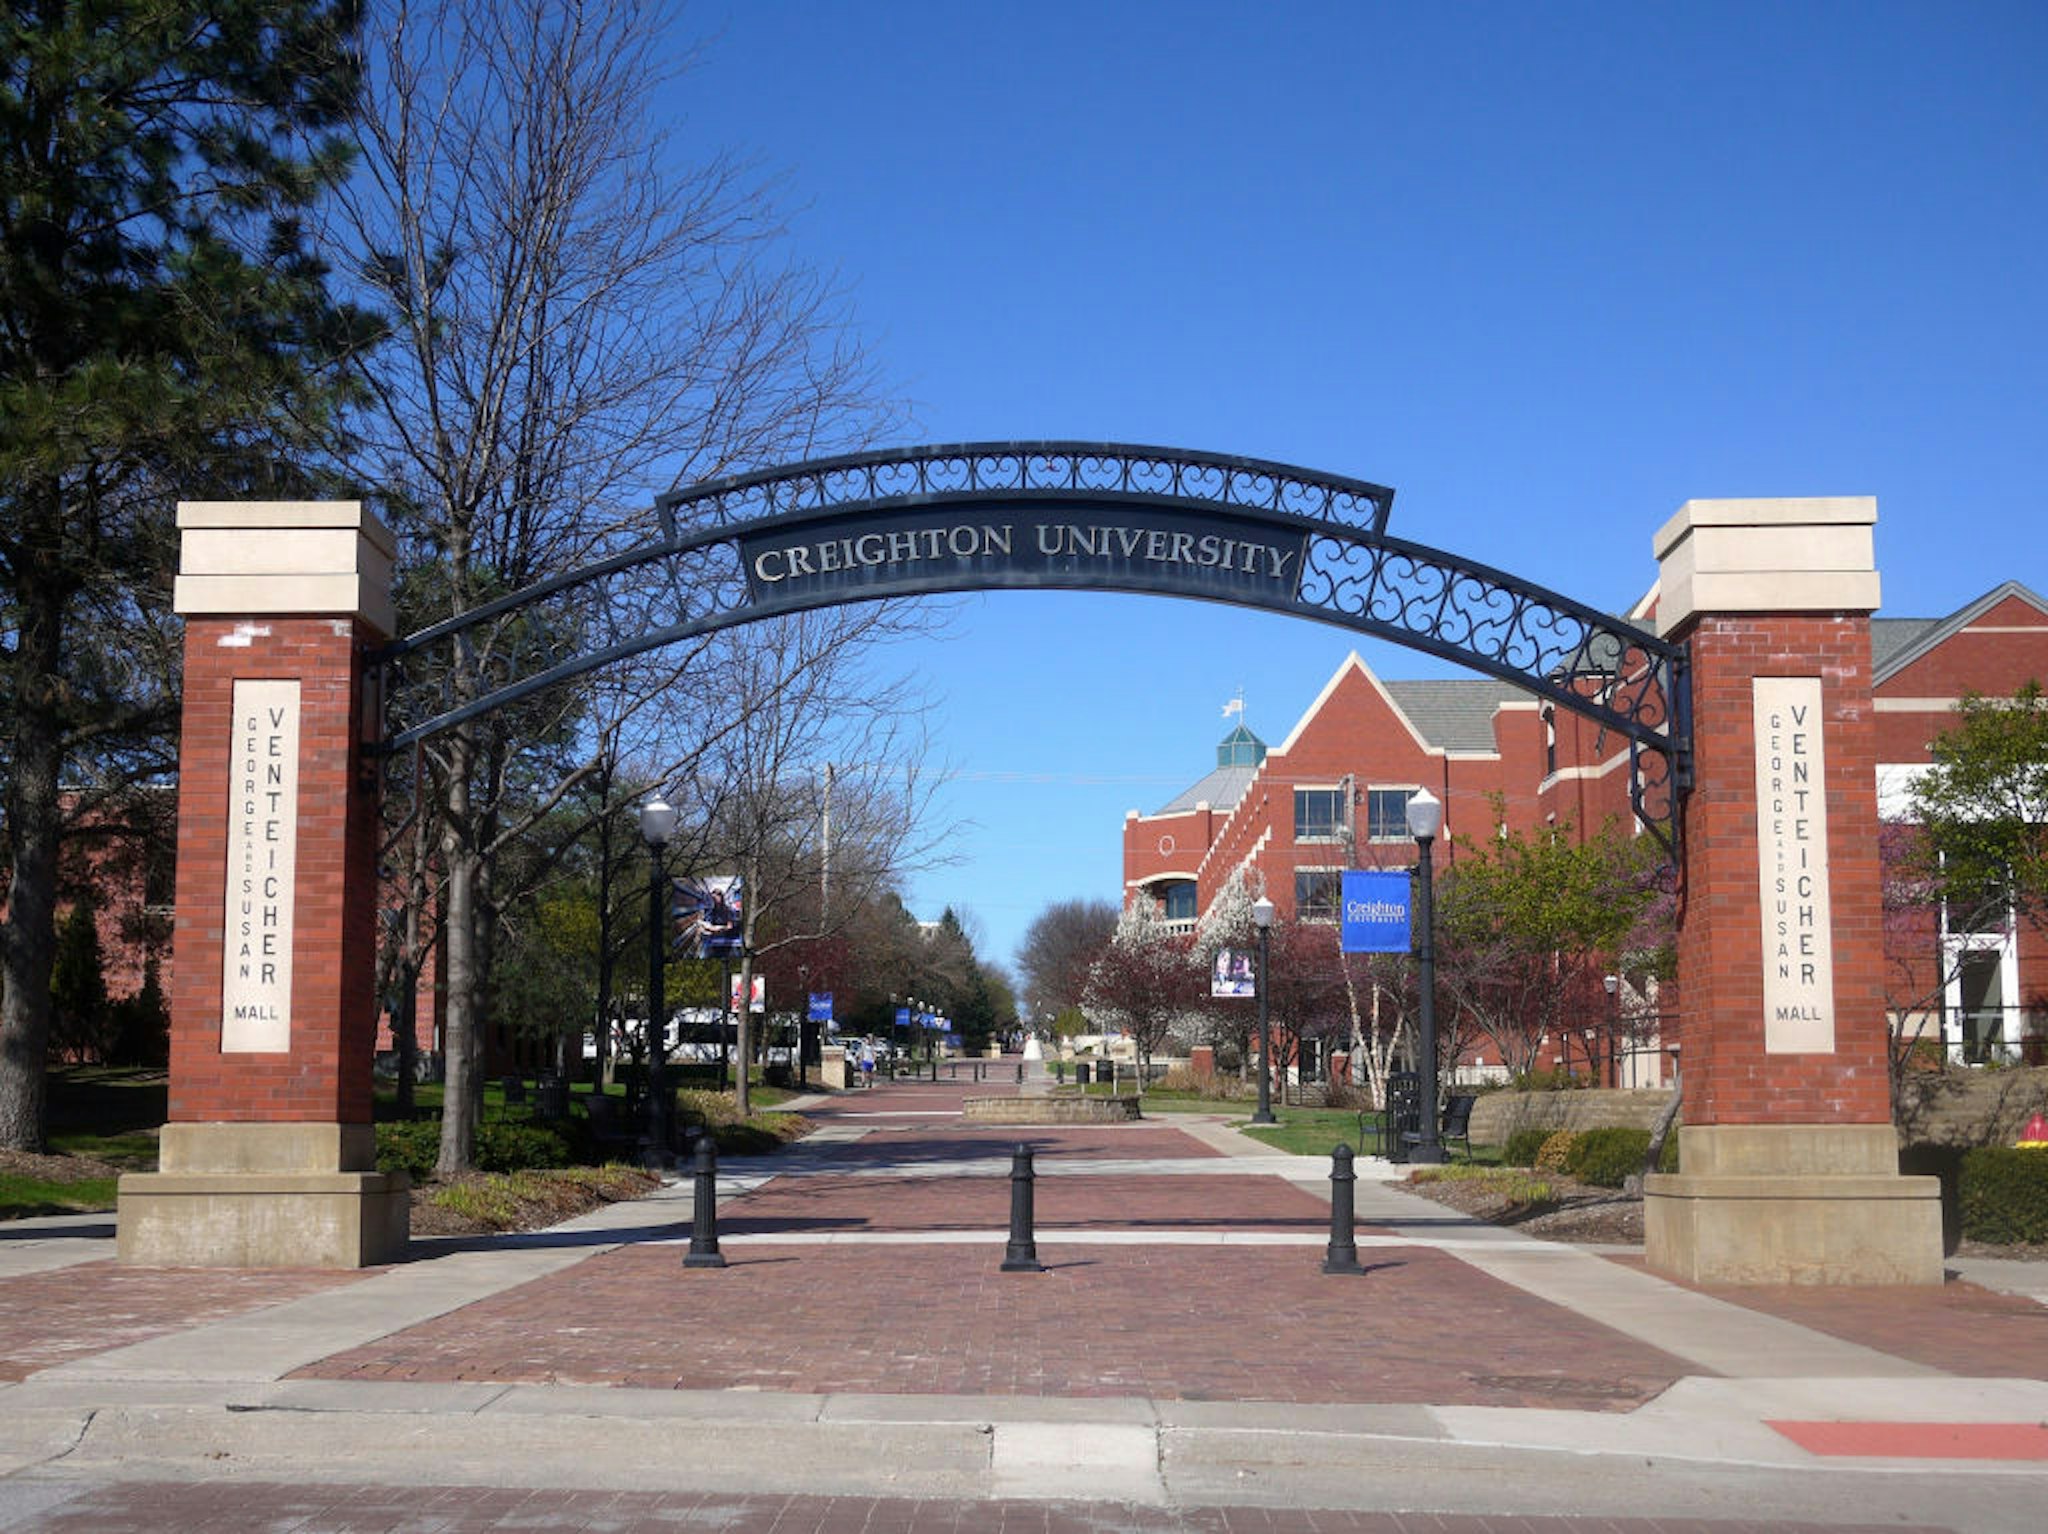 View of the gate at Creighton University, Omaha, Nebraska, April 6, 2017.